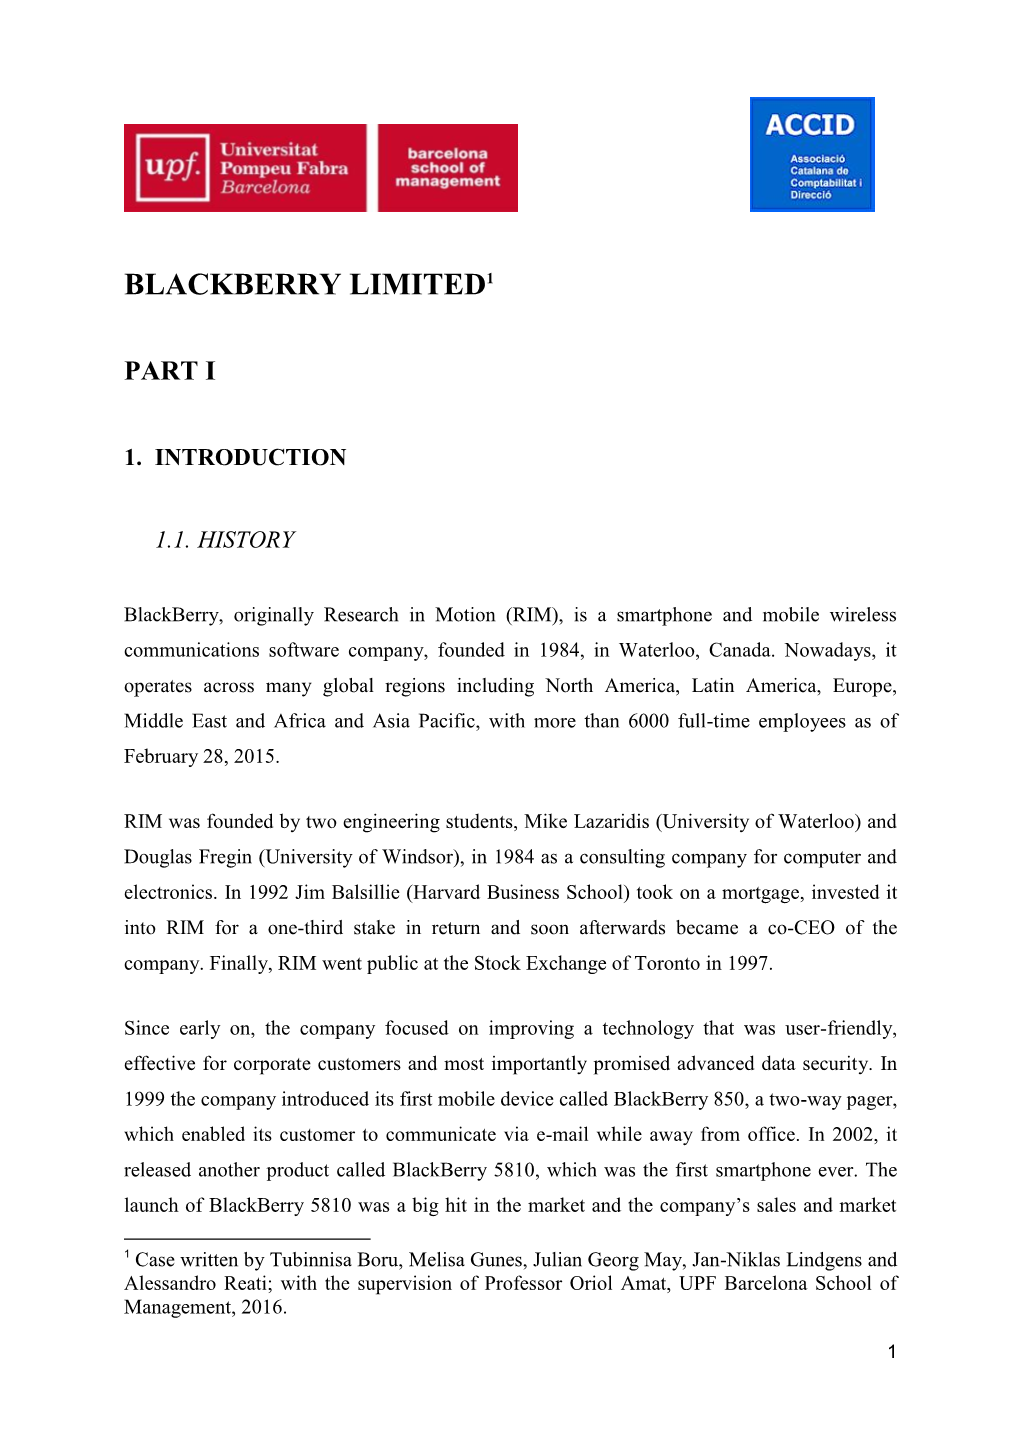 Blackberry Limited1